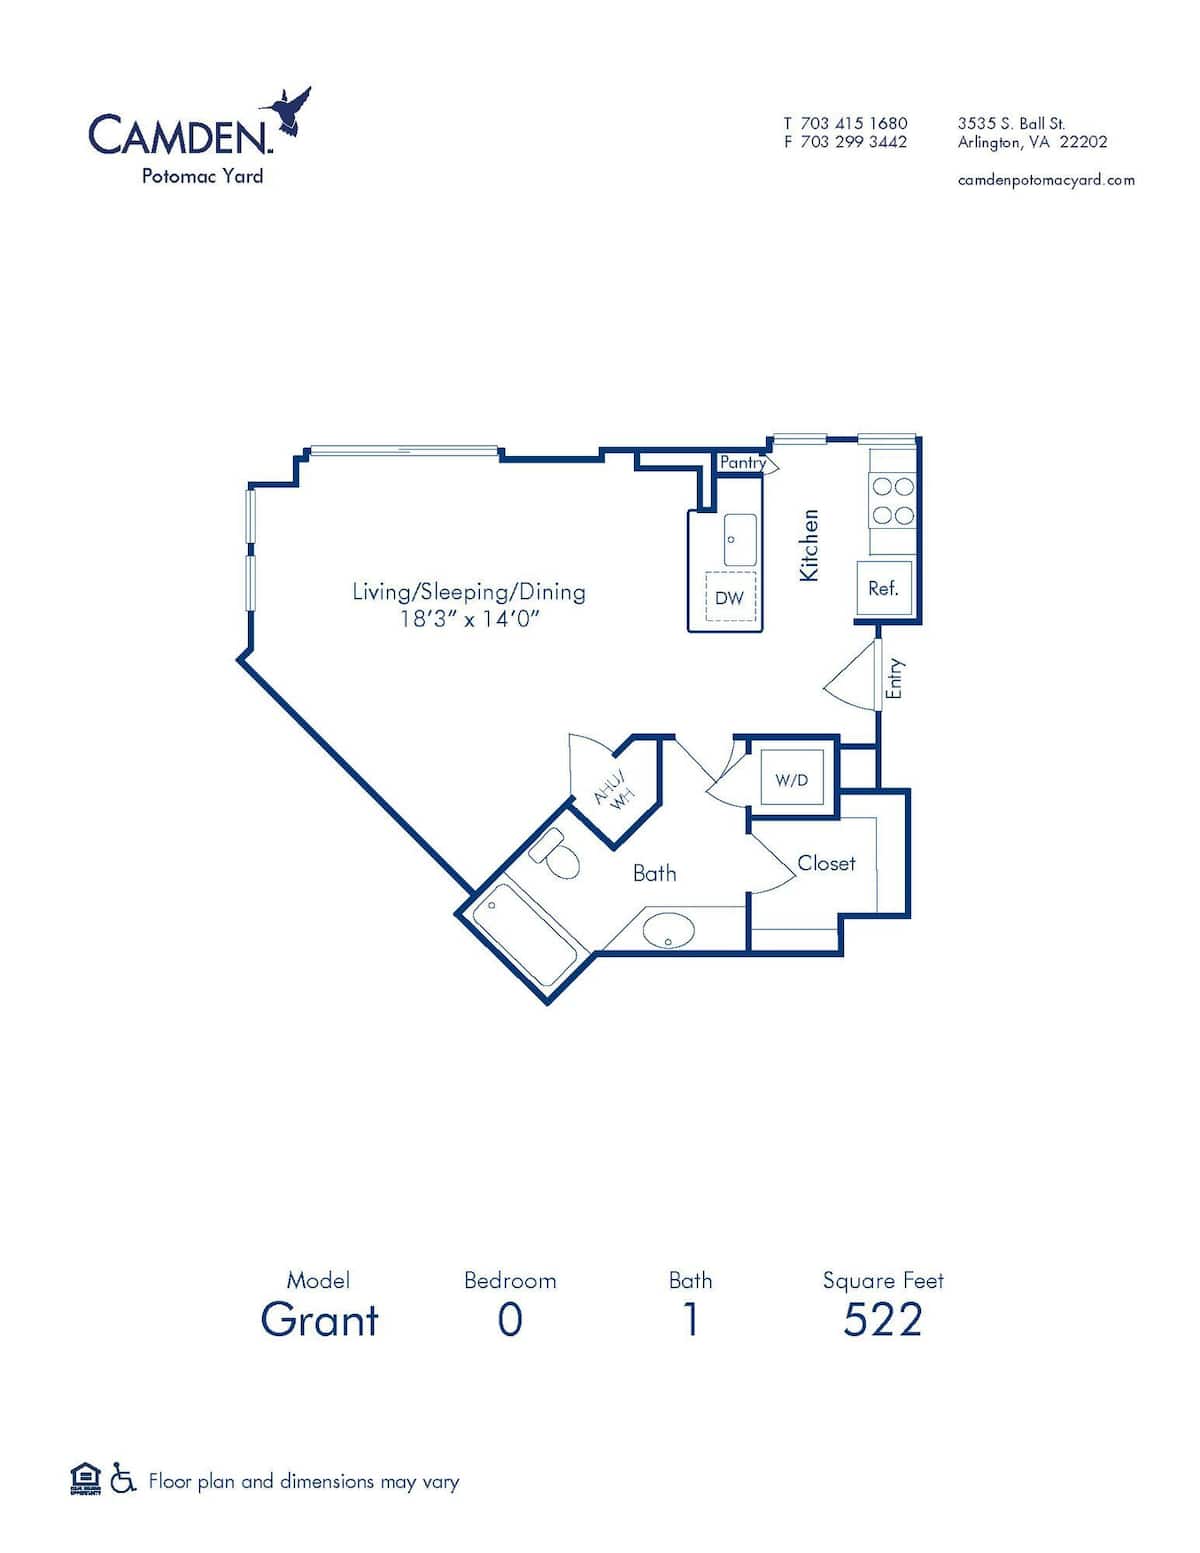 Floorplan diagram for Grant, showing Studio